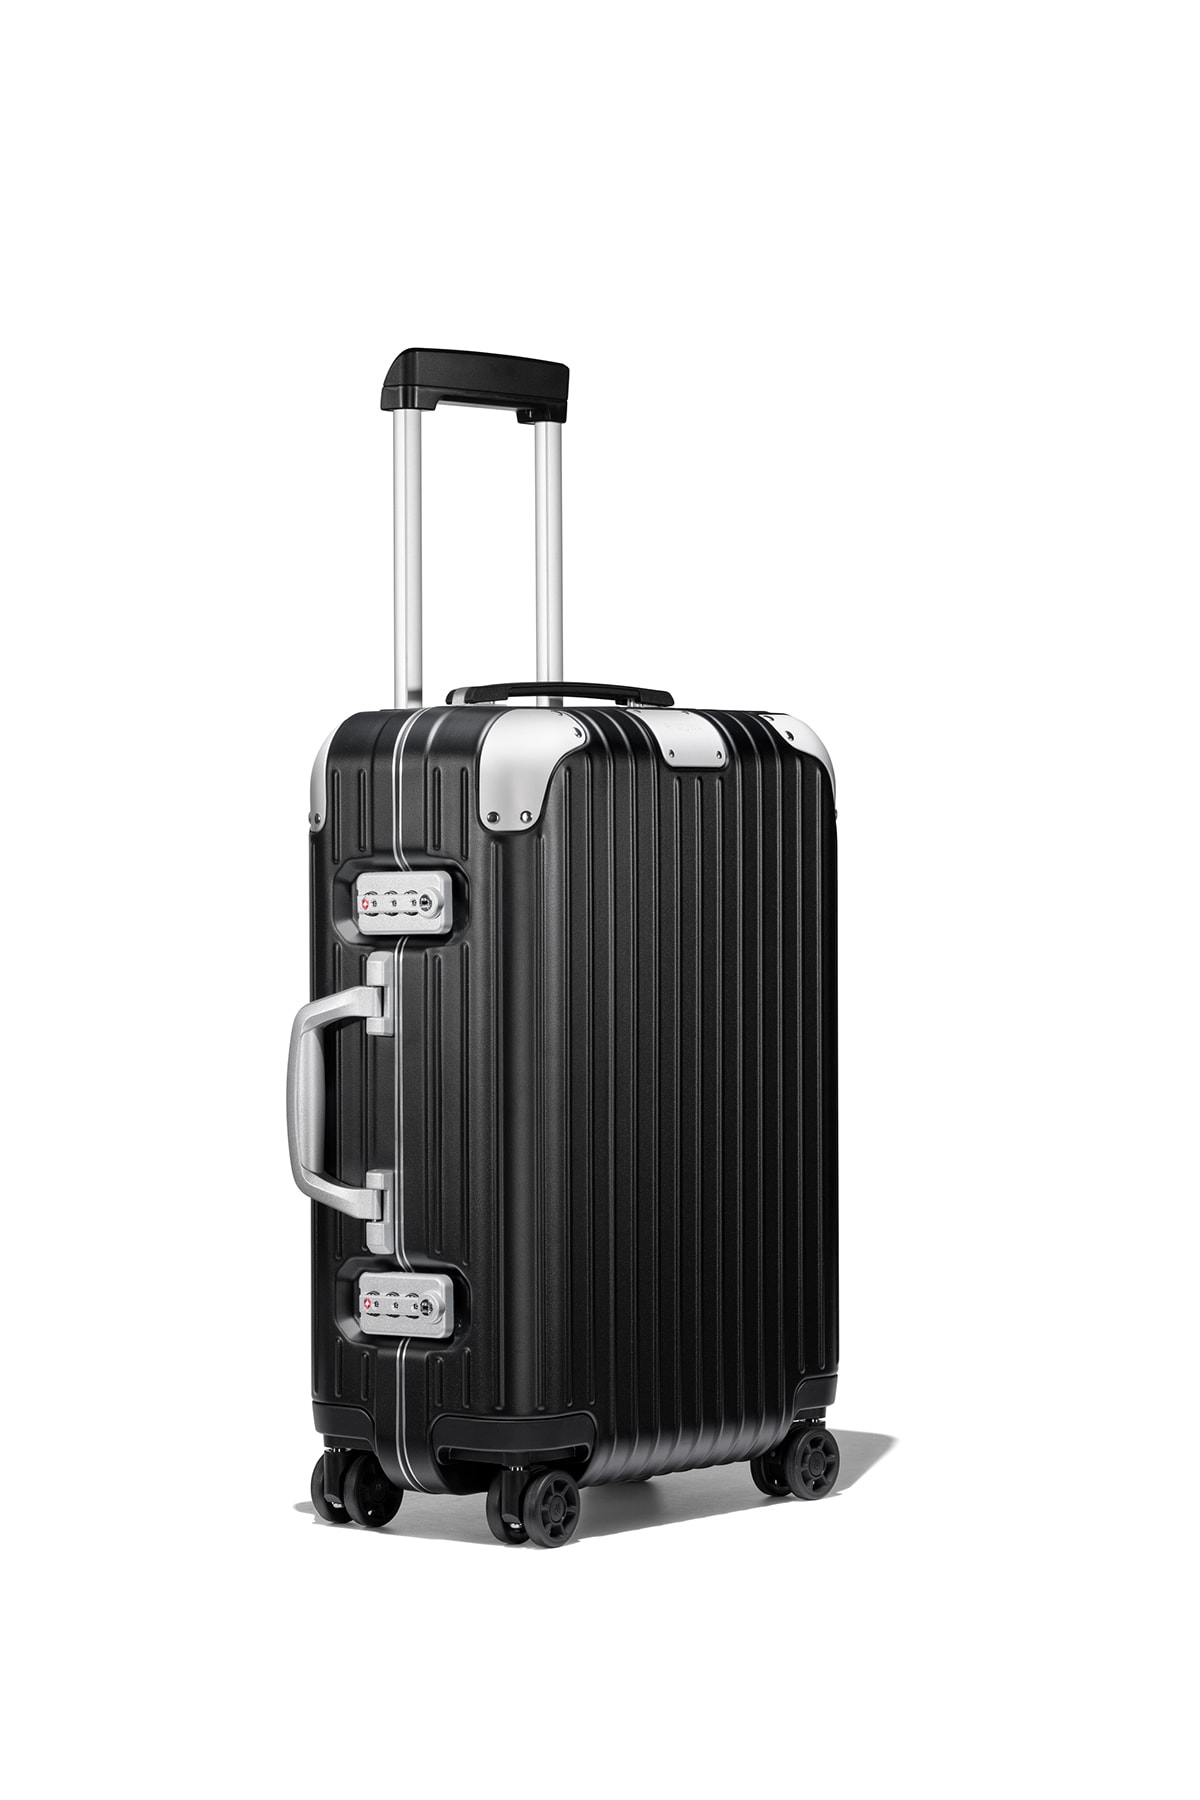 rimowa aluminum luggage redesign suitcases  Essential polycarbonate LITE original model drop release info logo june 5 2018